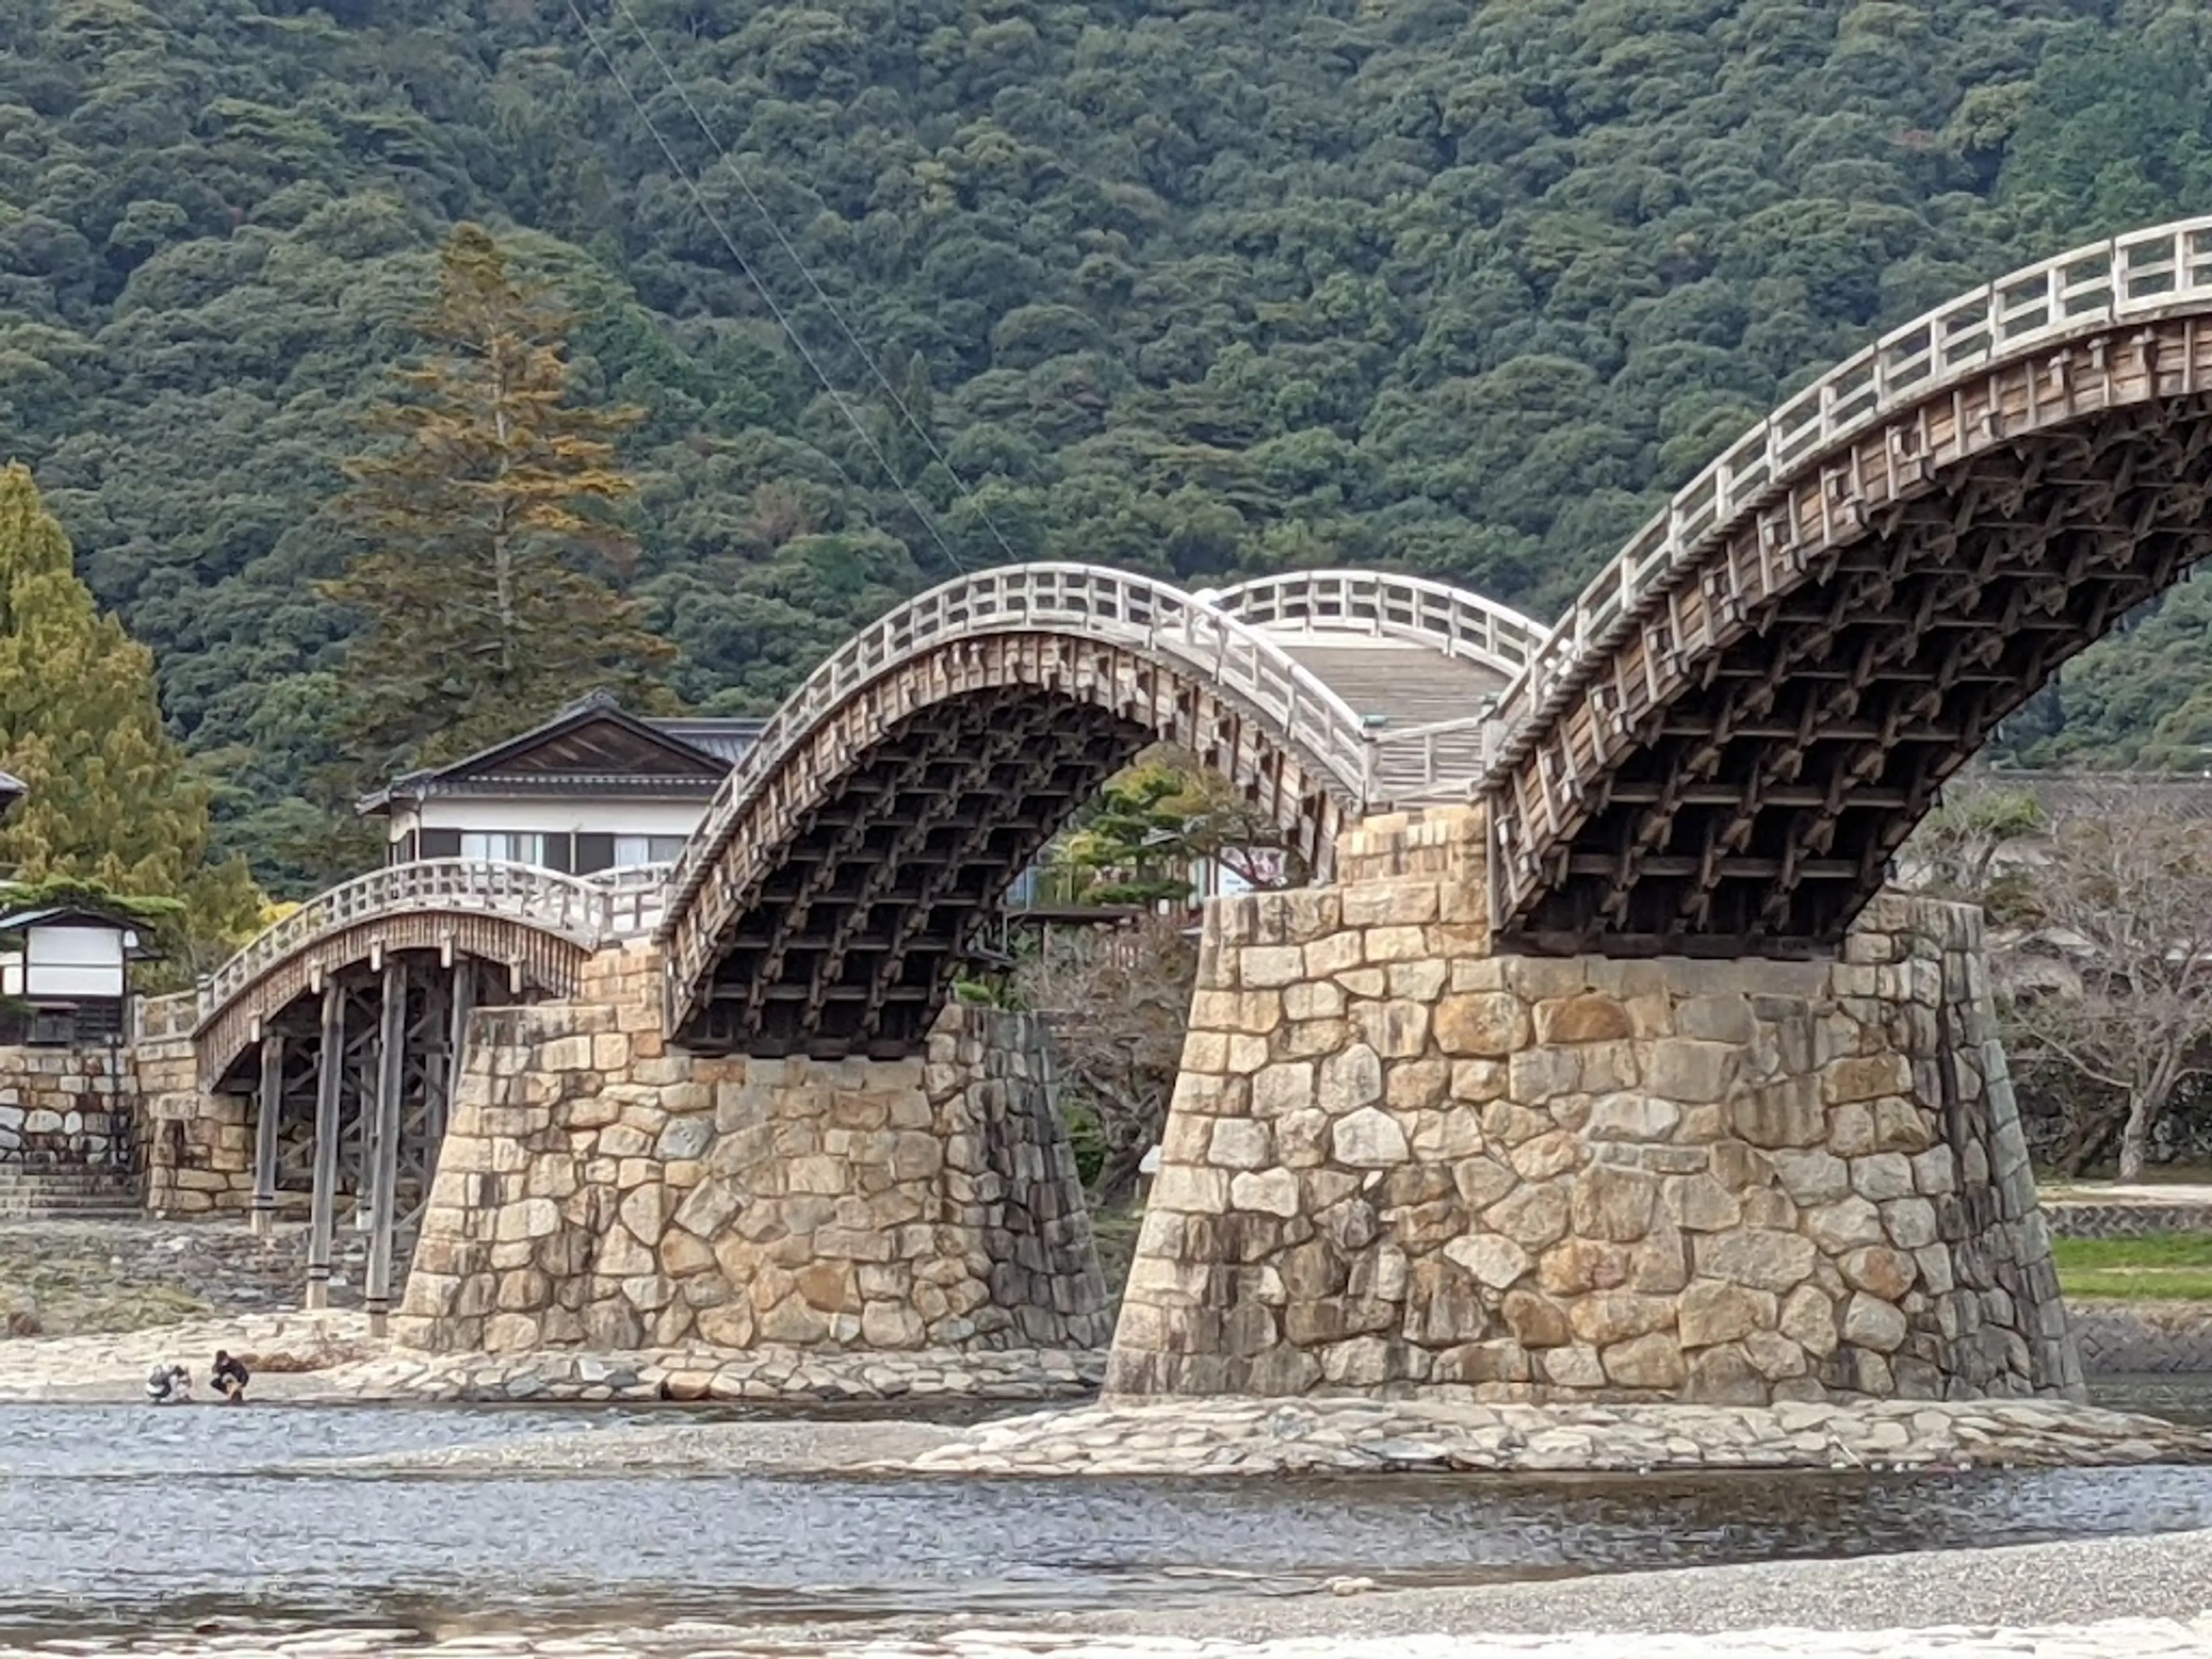 Kintaikyo Bridge